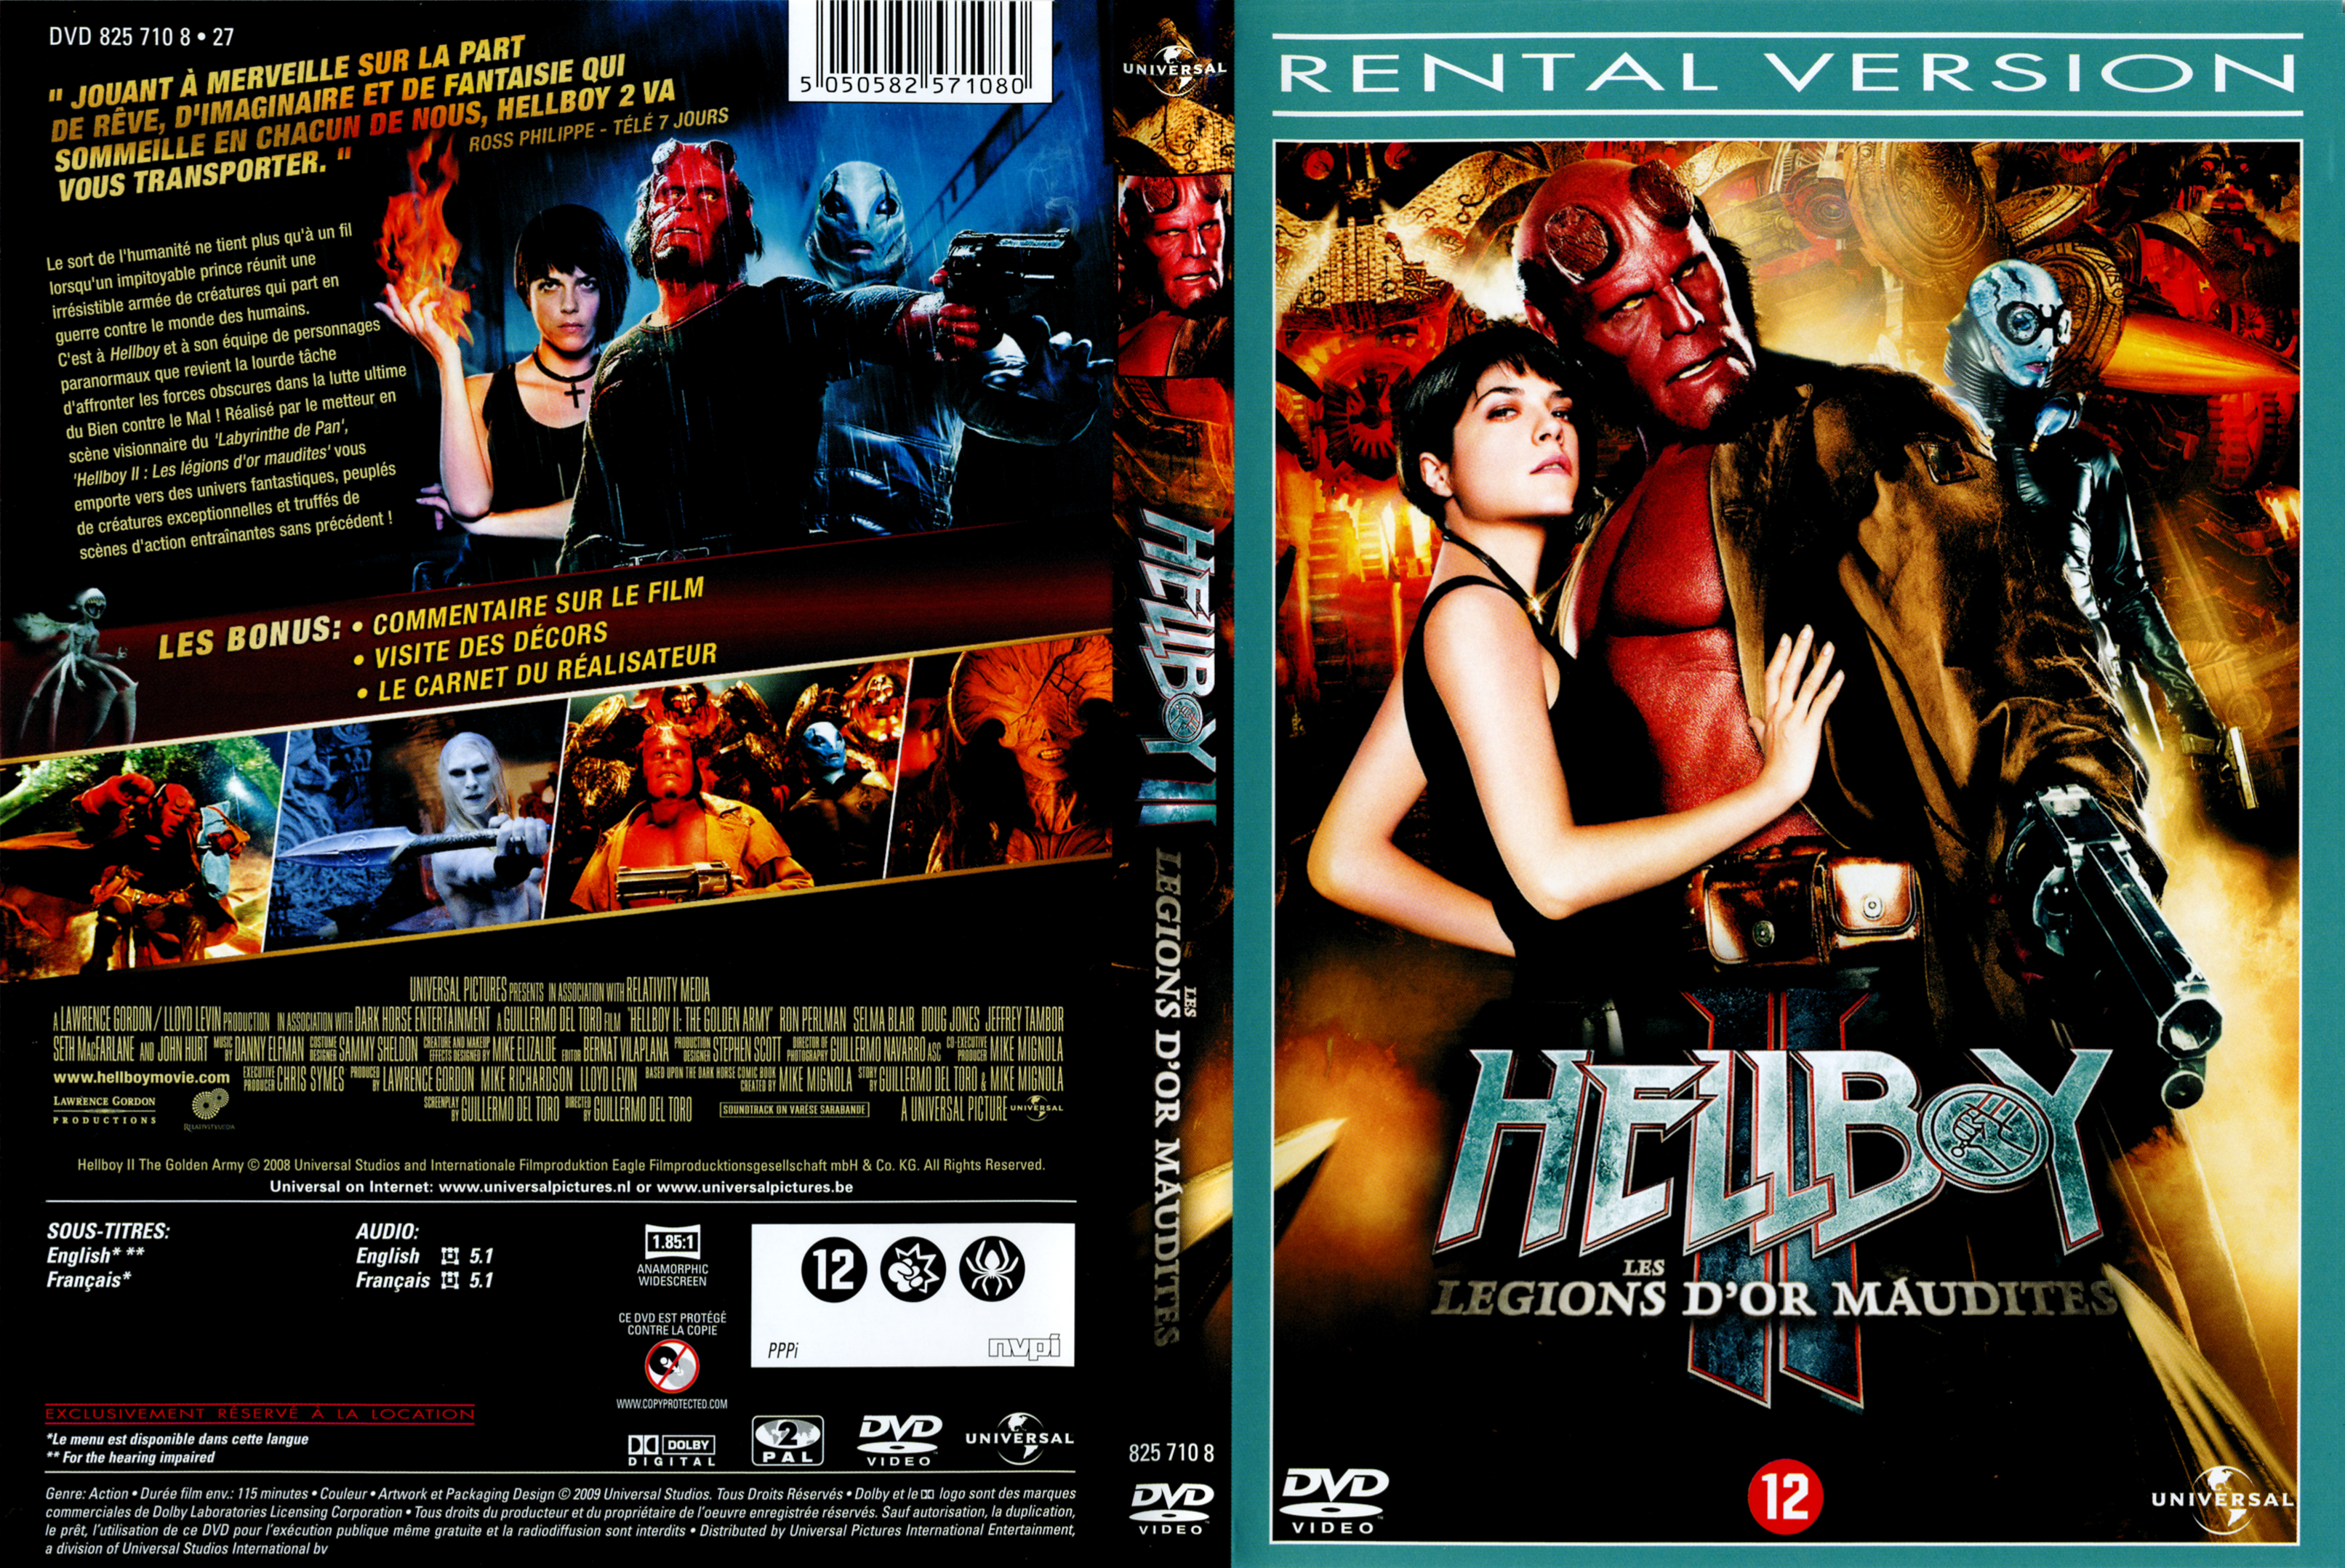 Jaquette DVD Hellboy 2